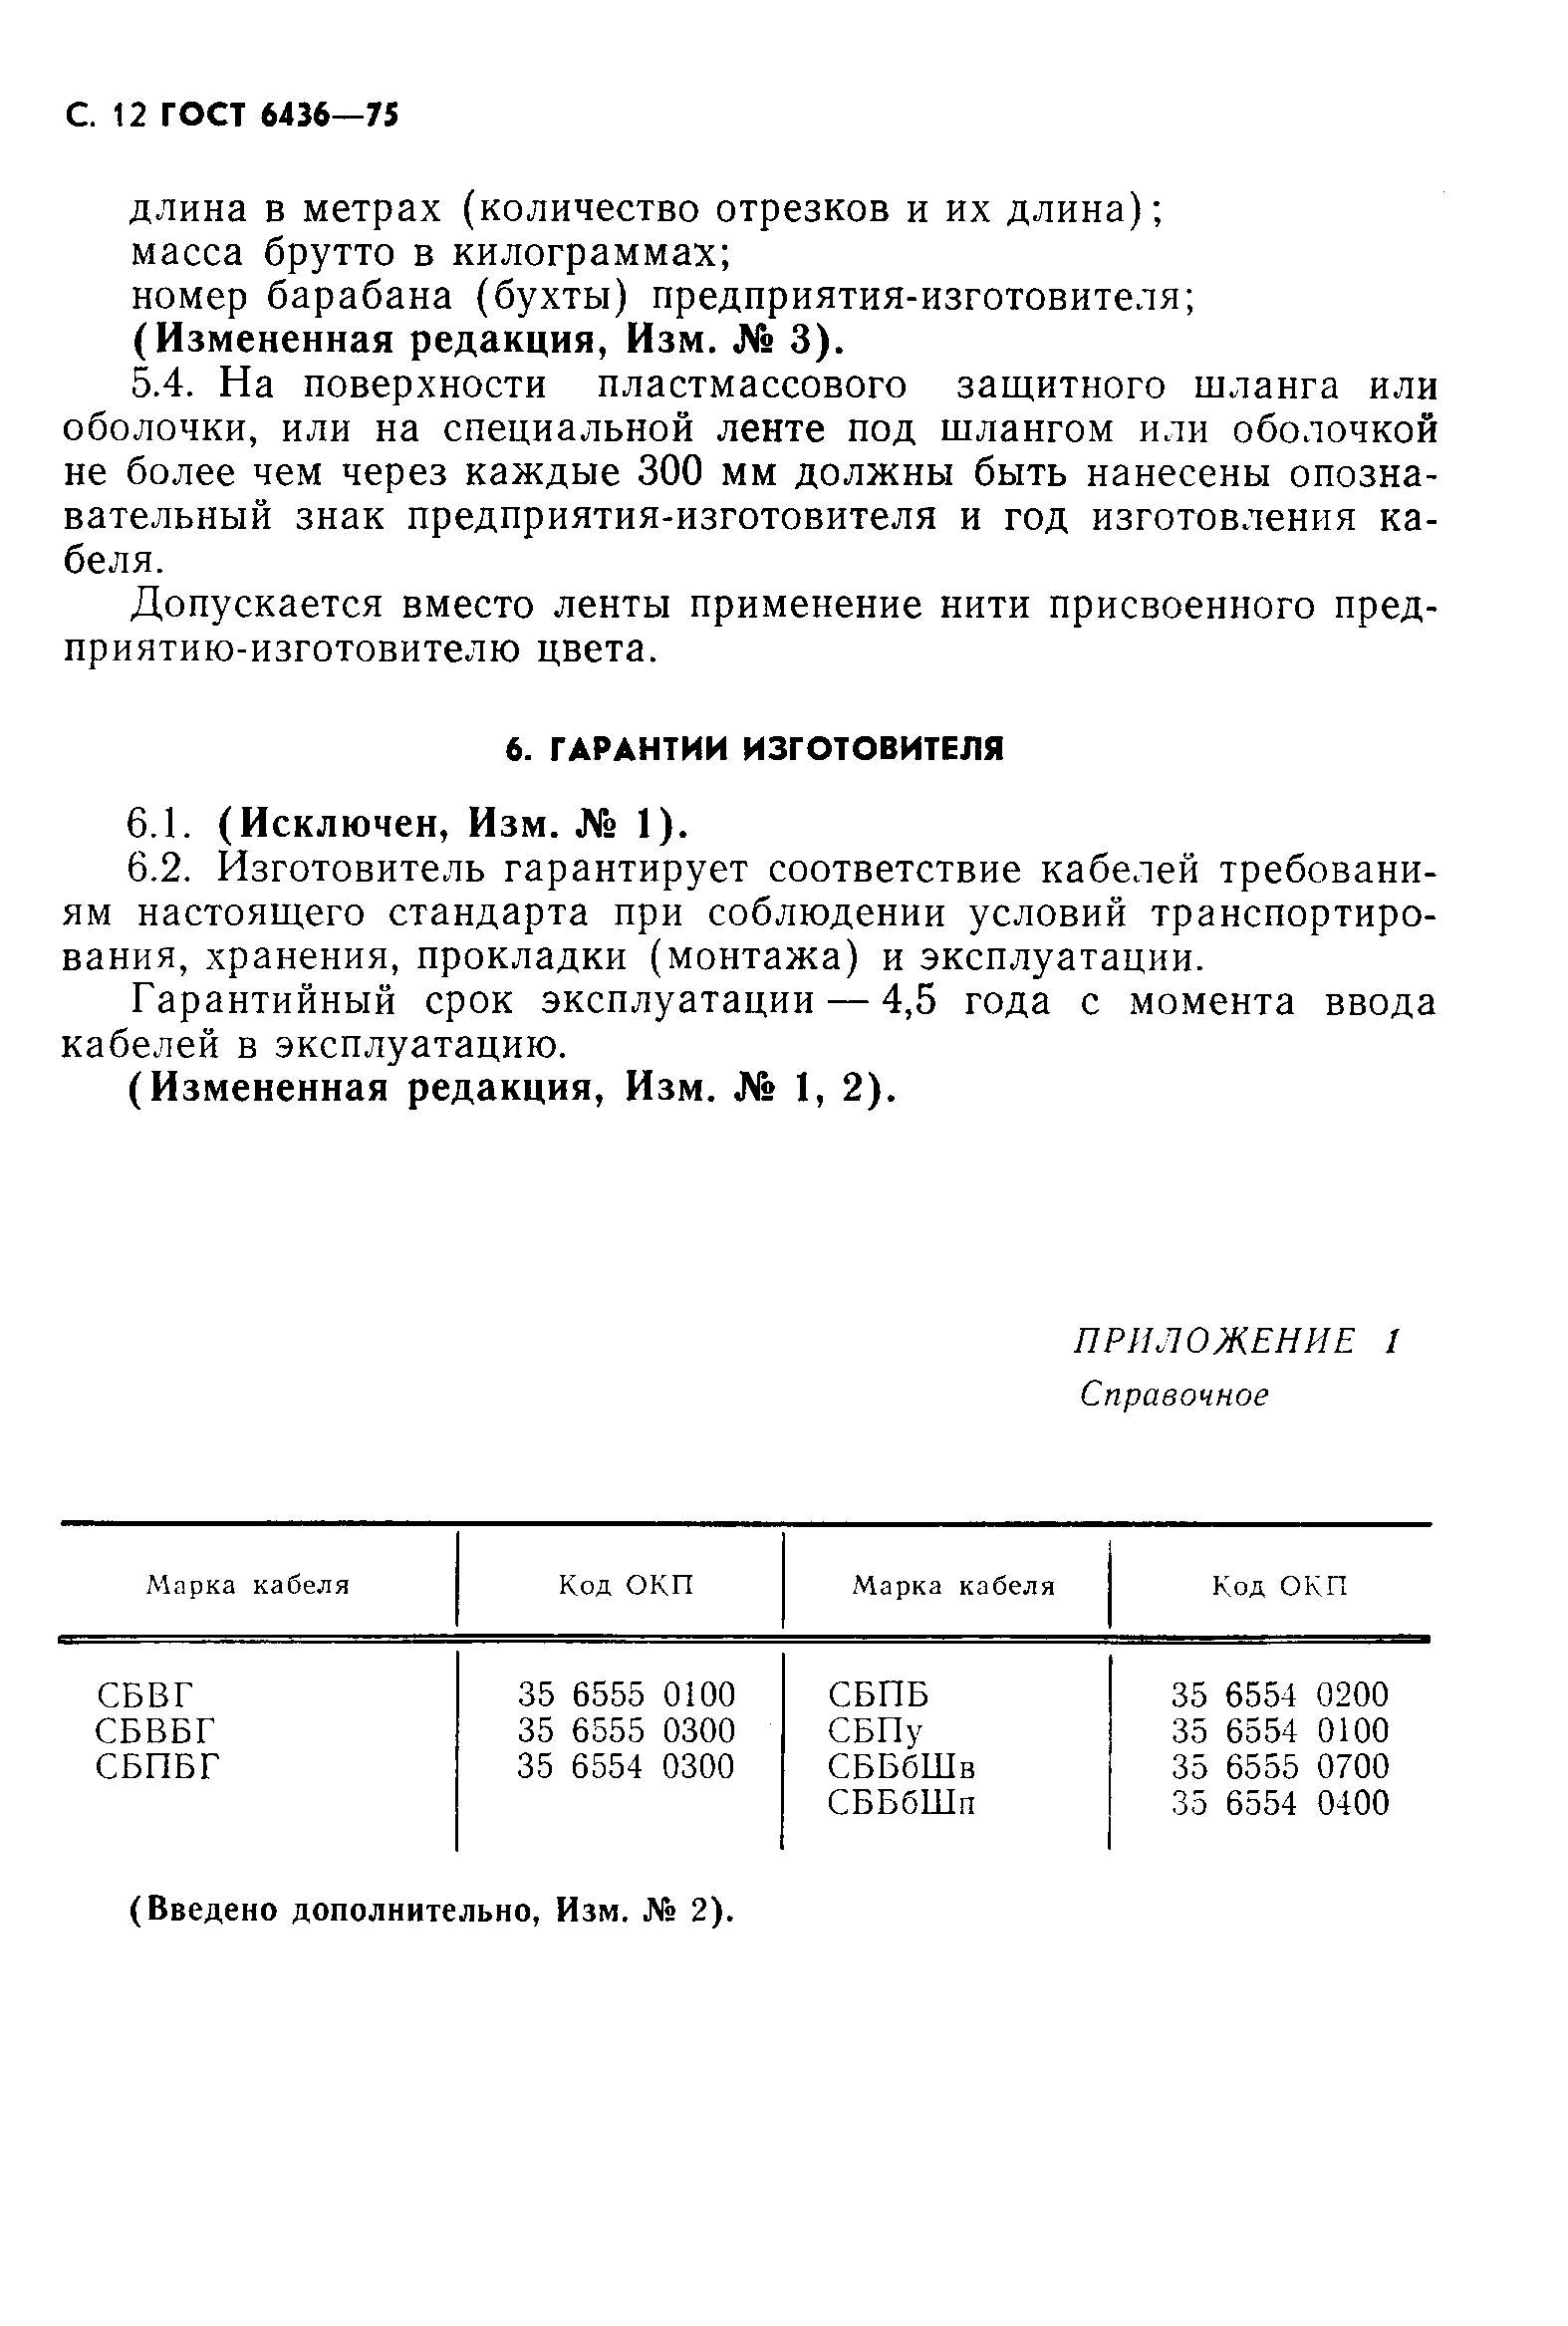 ГОСТ 6436-75